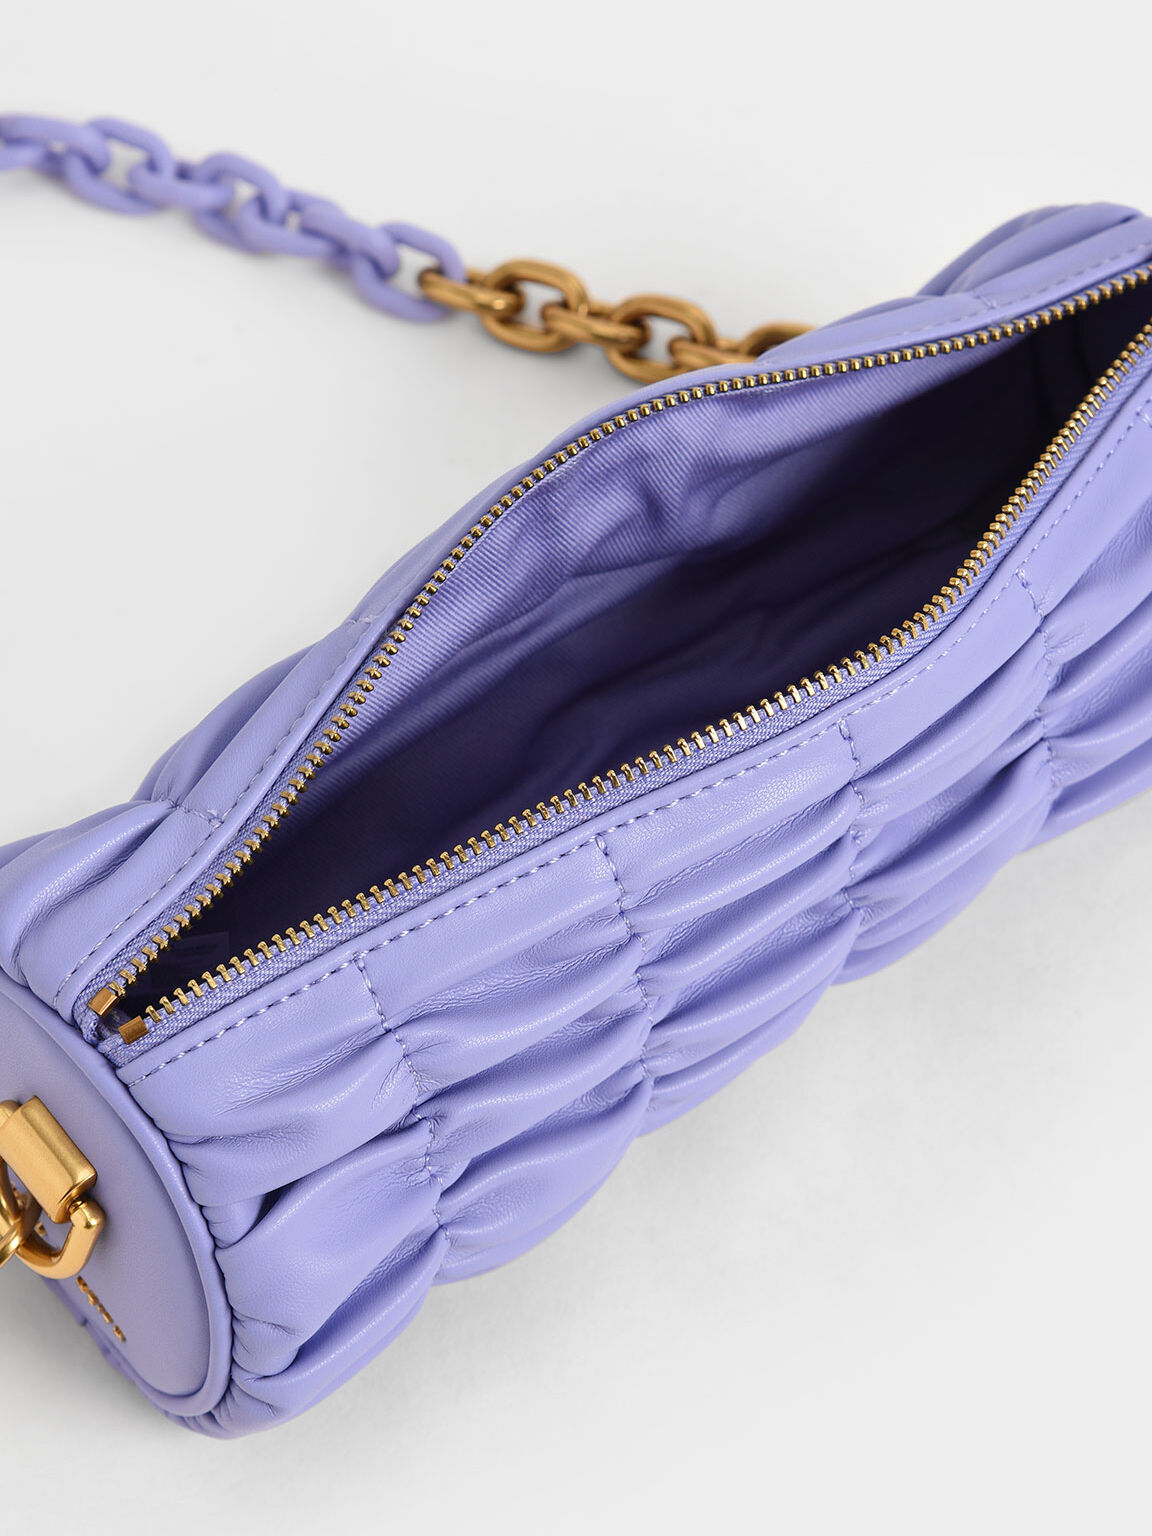 Tallulah Ruched Chain-Handle Shoulder Bag, Lilac, hi-res